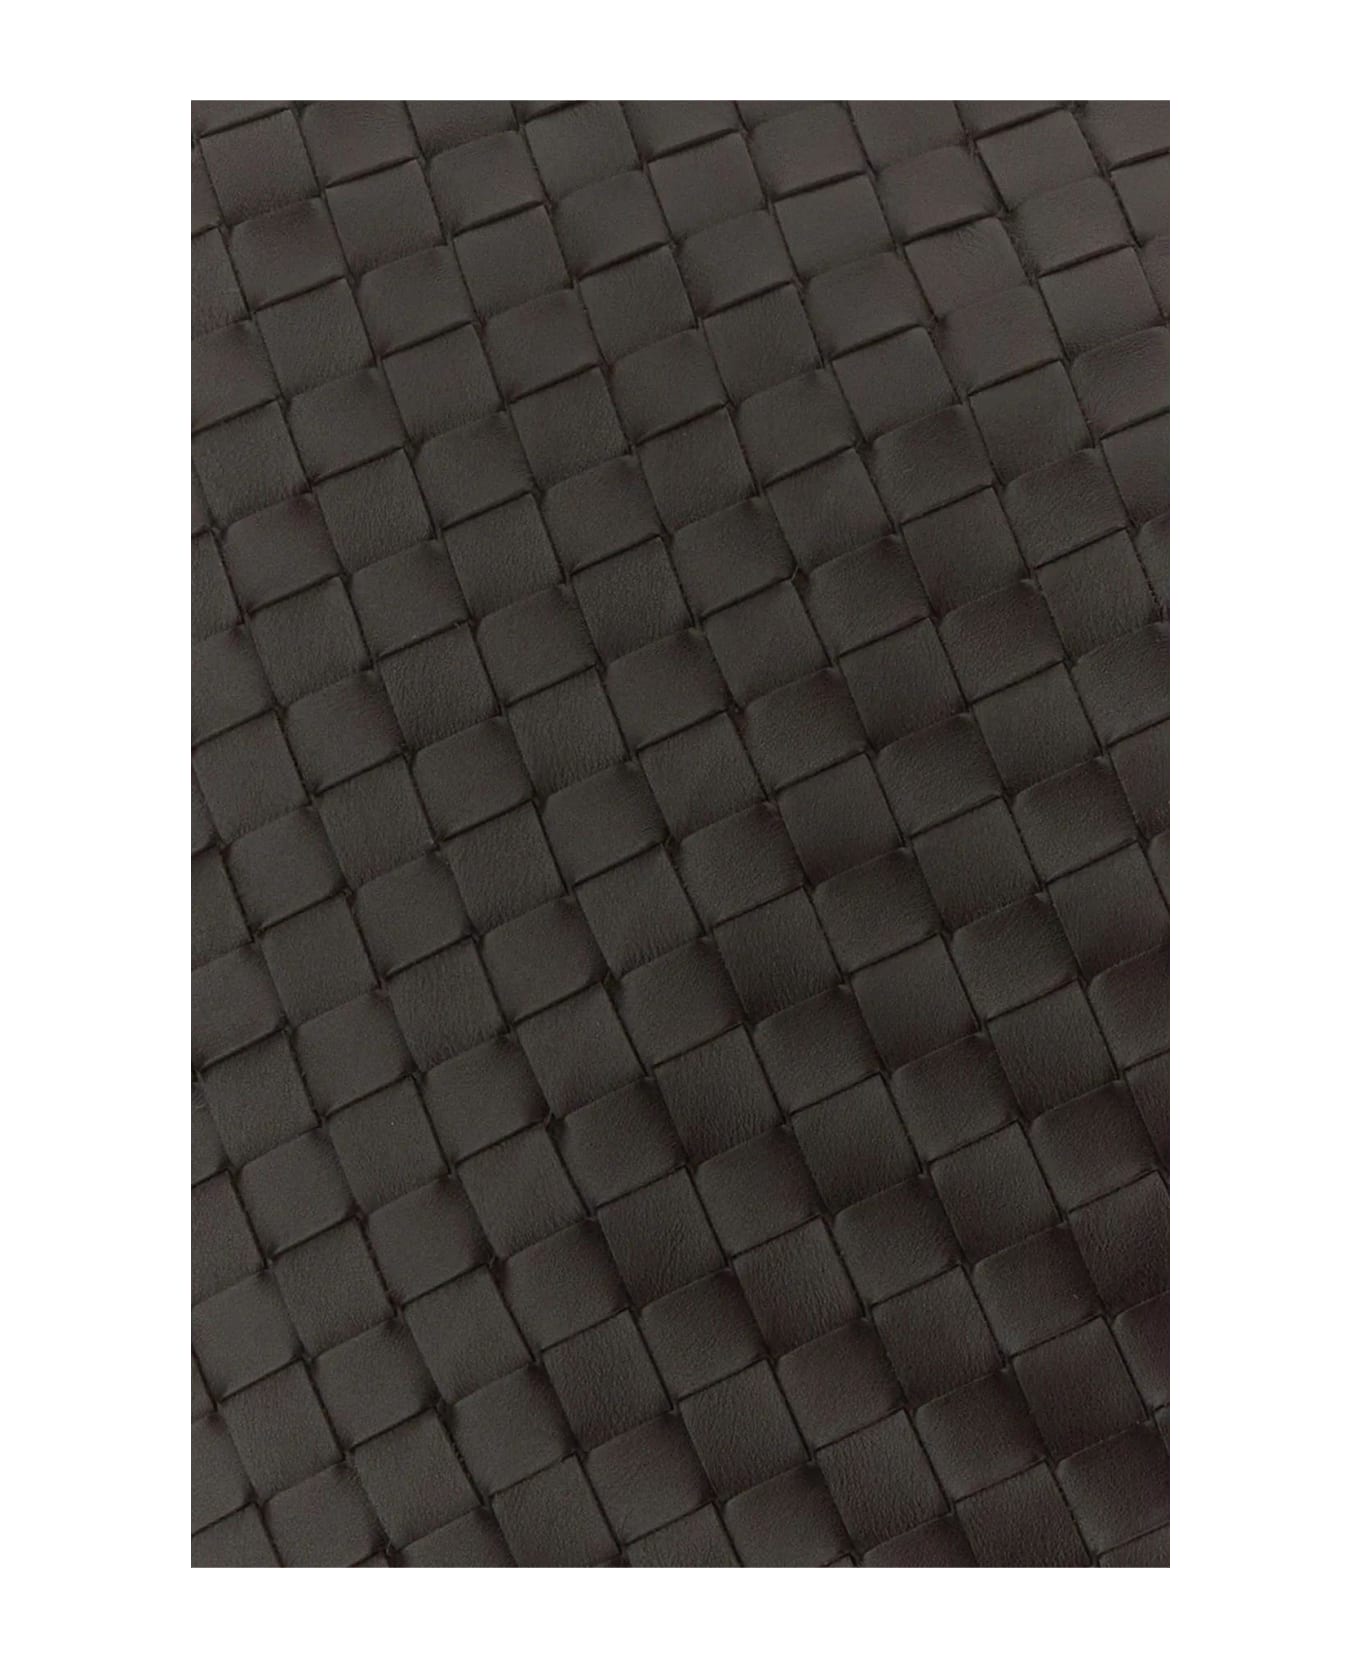 Bottega Veneta Dark Brown Leather Intrecciato Shopping Bag - Fondant/silver